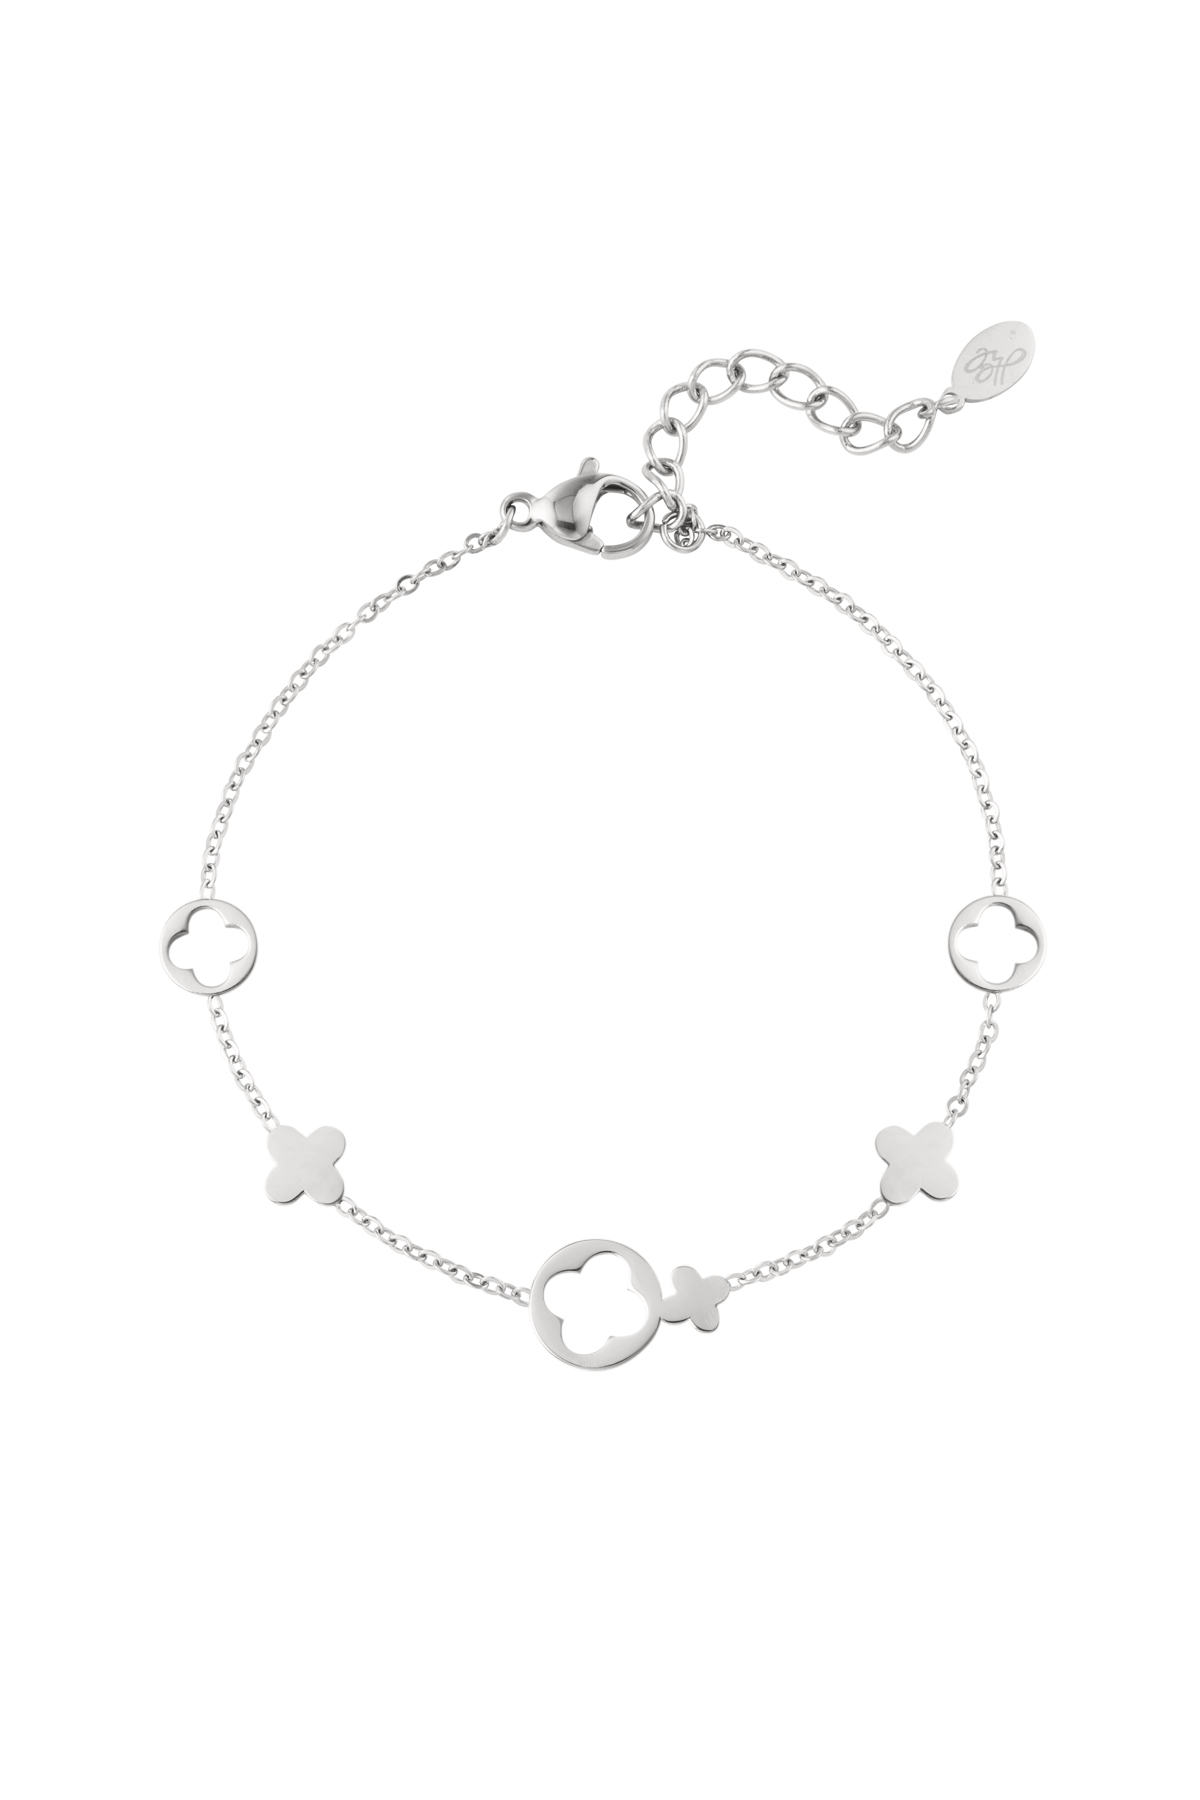 Bracelet clovers - silver